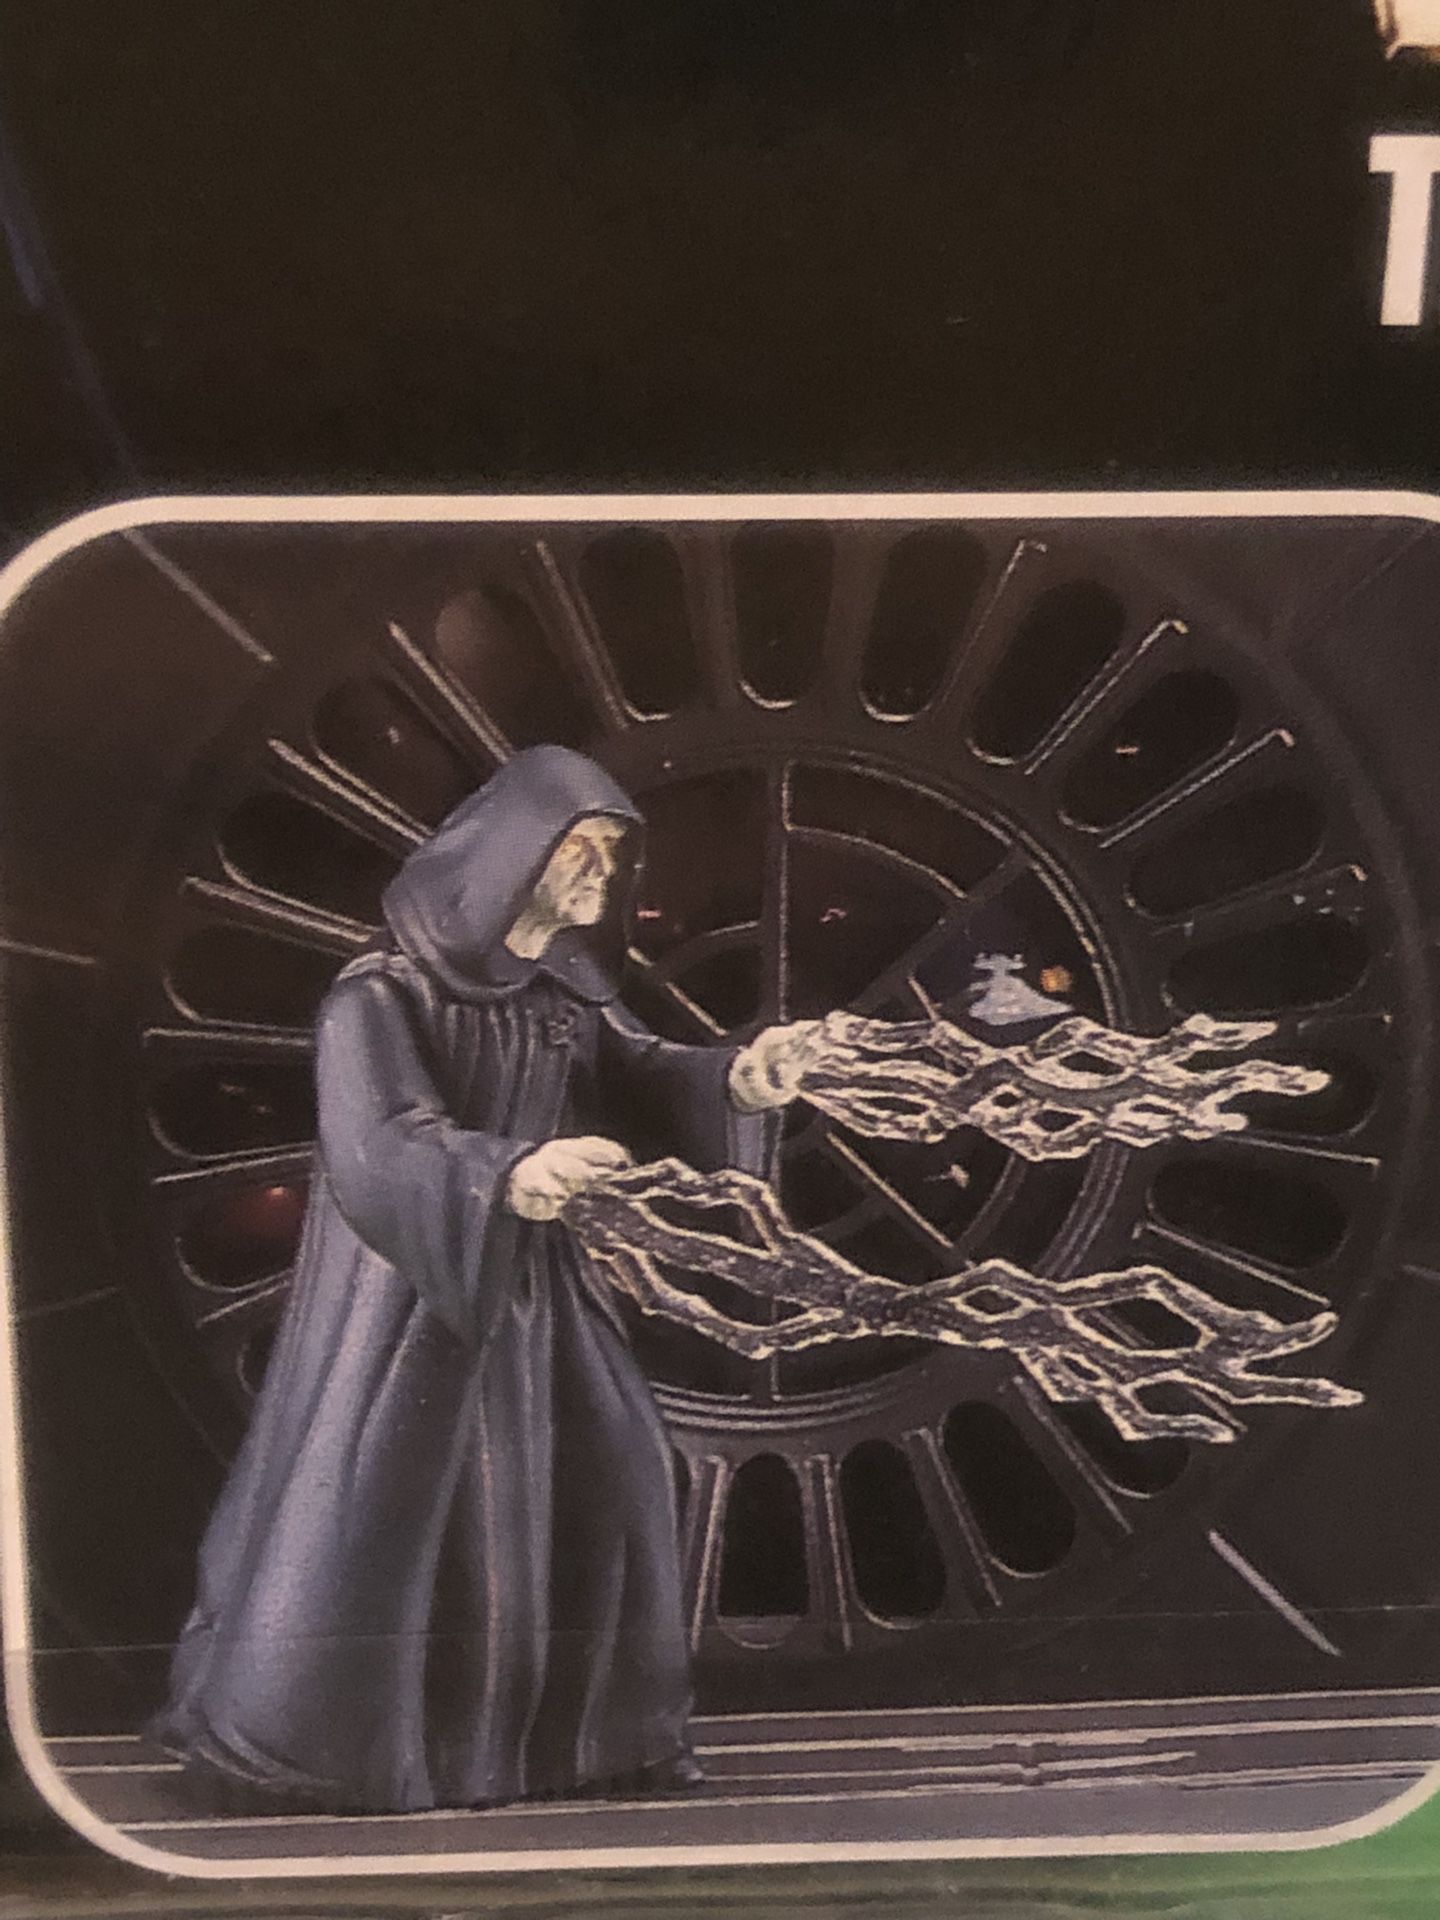 Star Wars Action Figure Original Box